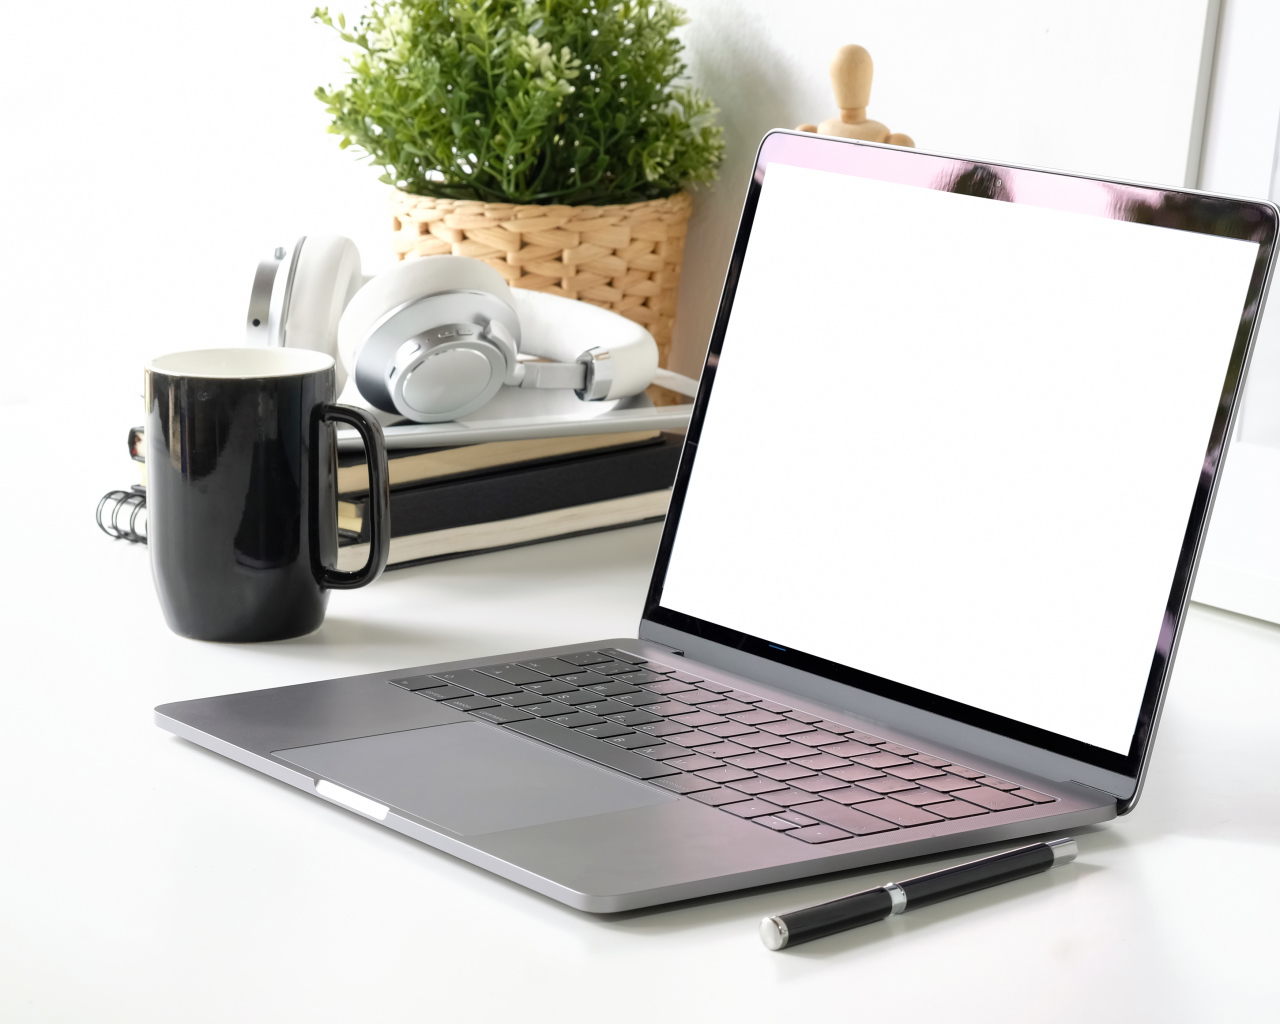 Laptop desktop with a cup